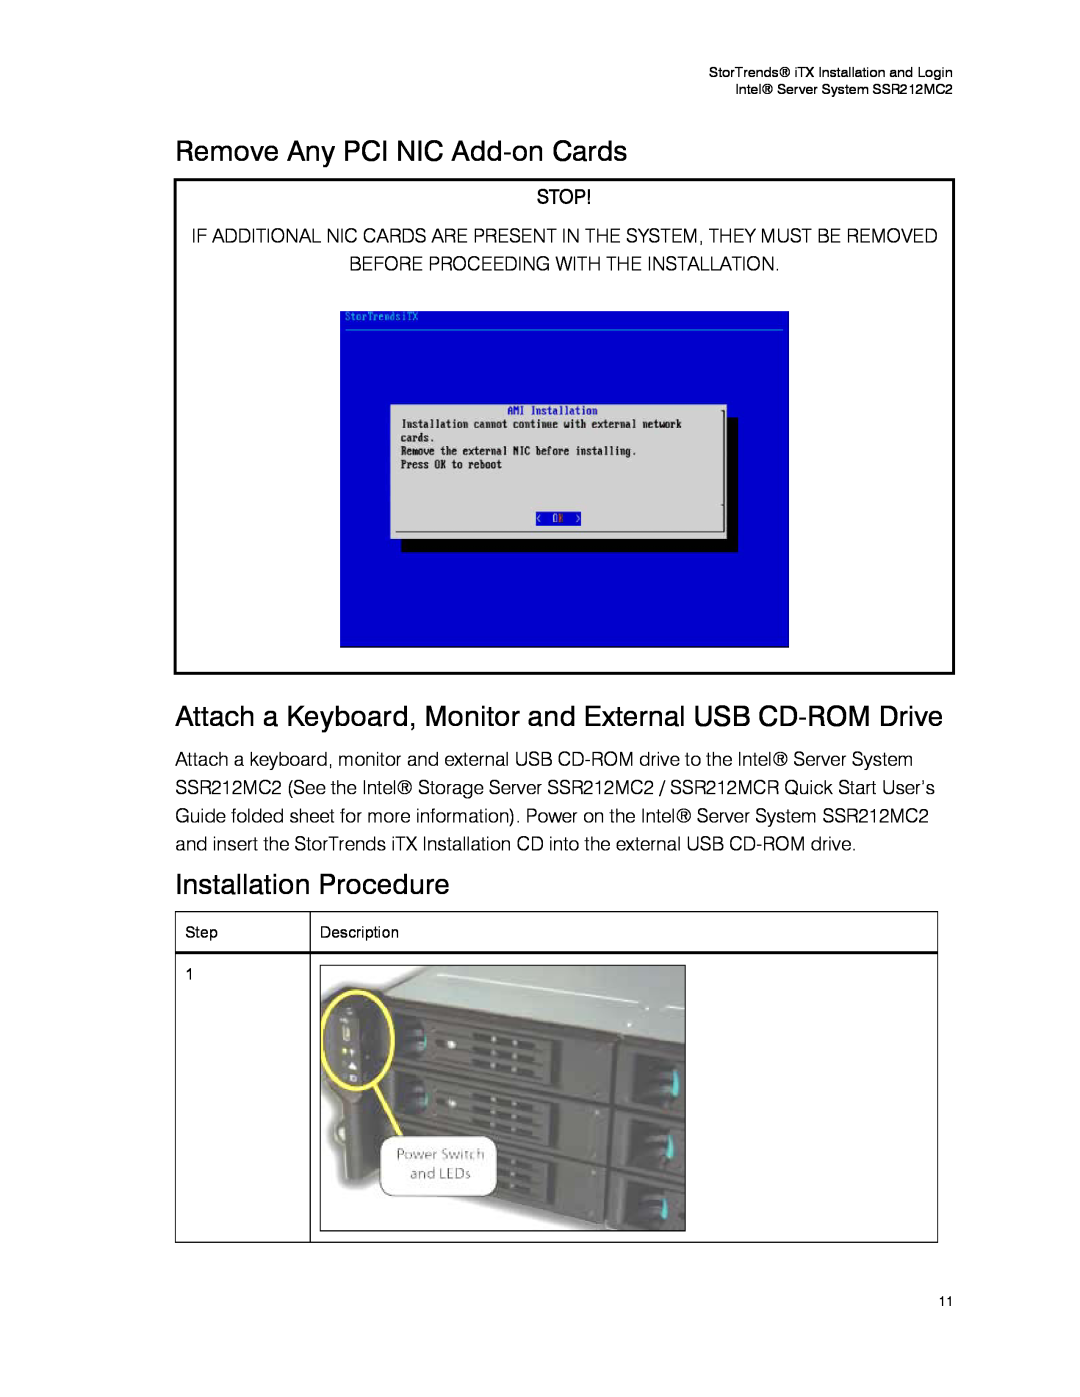 Intel SSR212MC2 manual Remove Any PCI NIC Add-onCards, Installation Procedure, Stop 